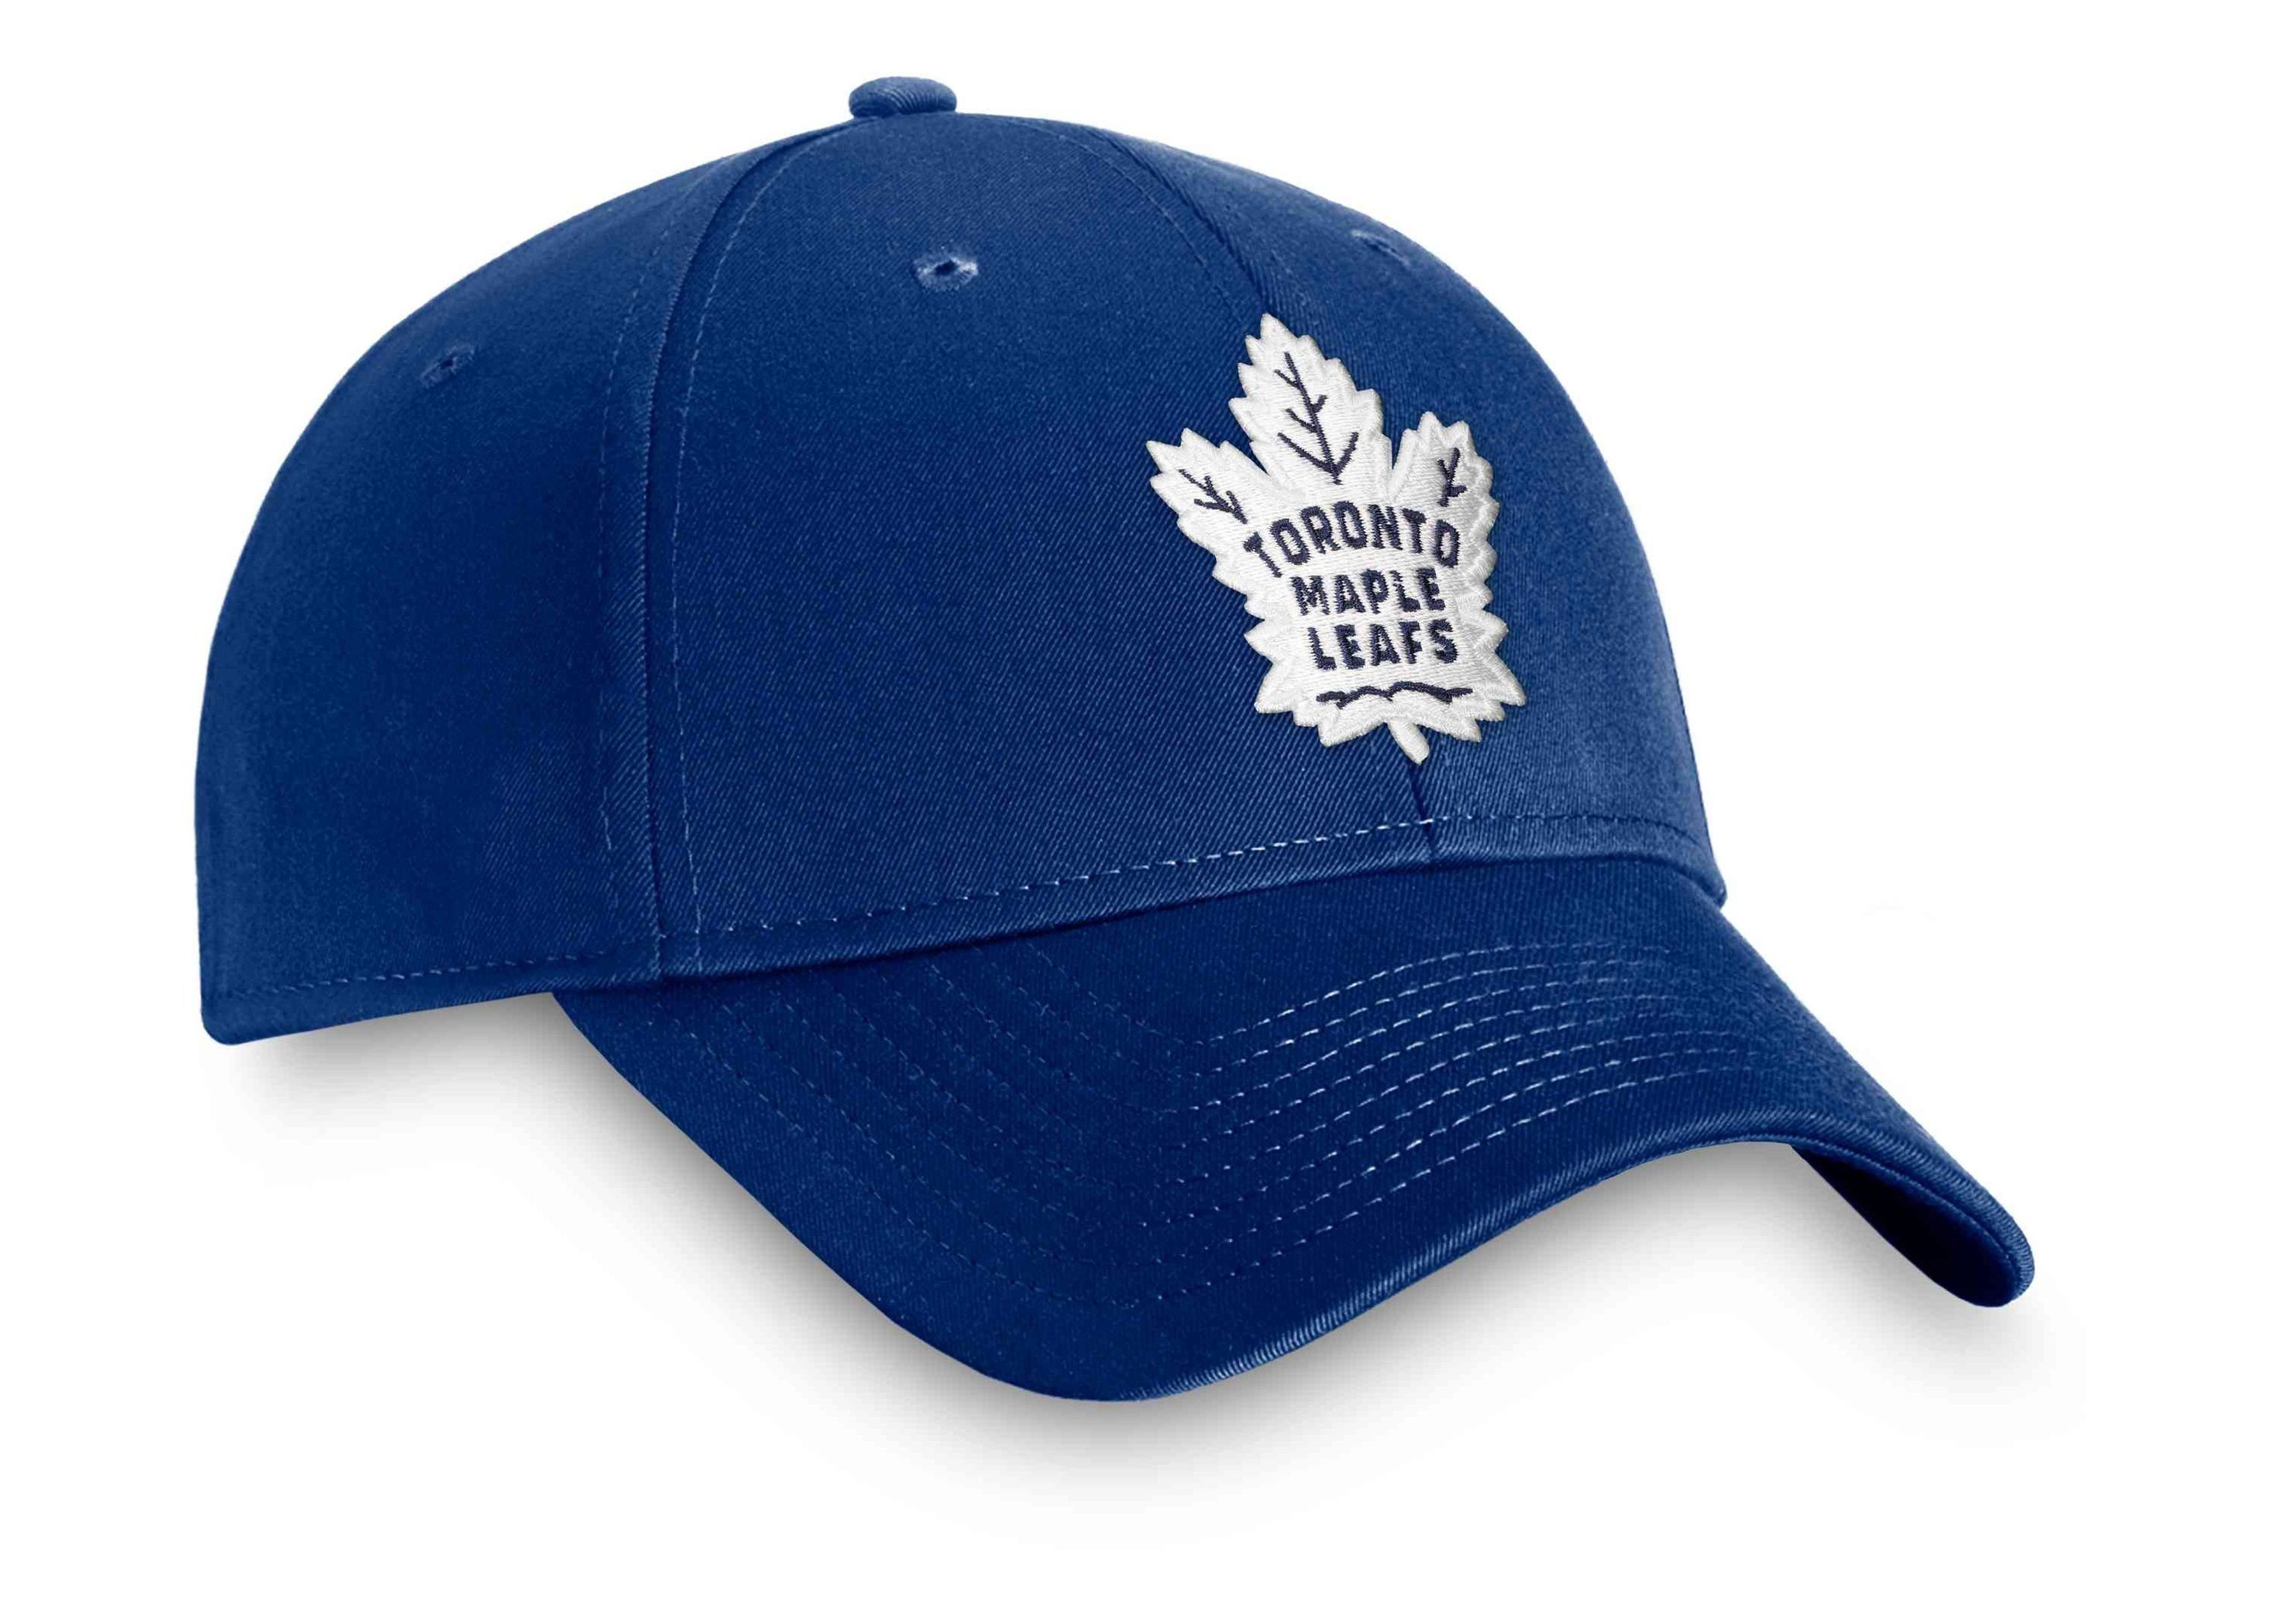 Adjustable Maple Toronto Structured Snapback Leafs Fanatics NHL Core Cap